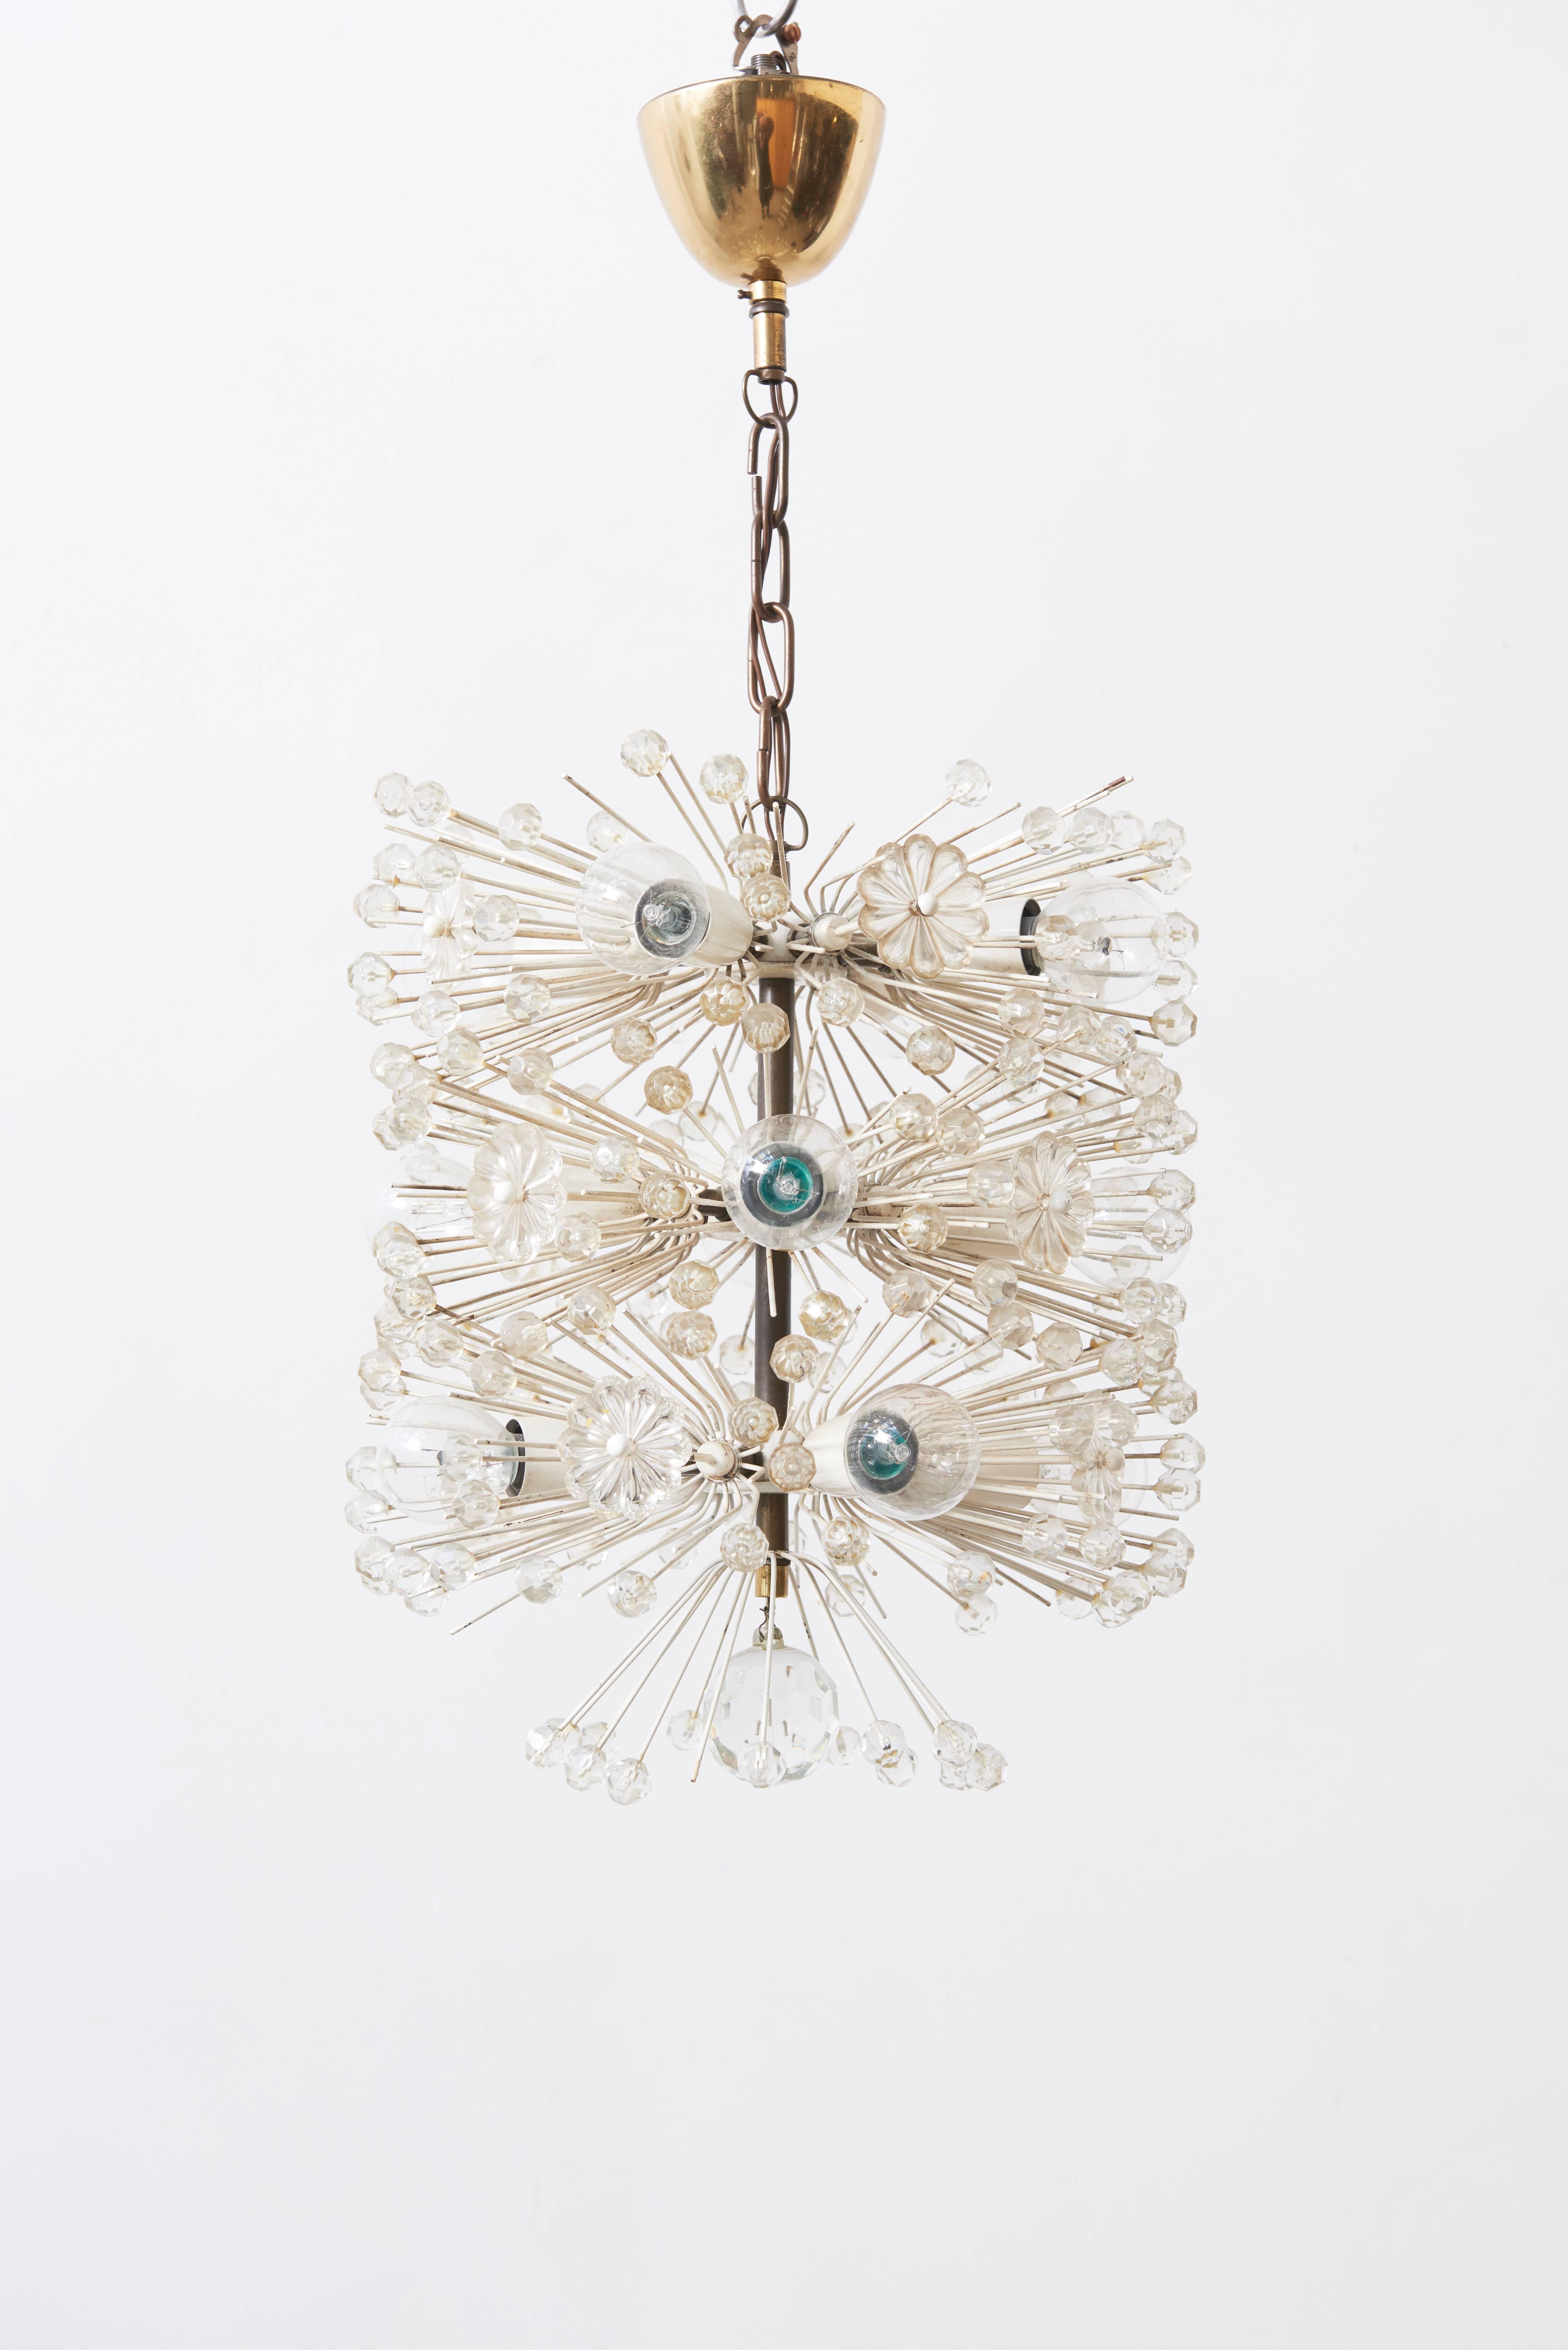 Very rare Sputnik chandelier designed by Emil Stejnar, circa 1955 and executed by Rupert Nikoll, Vienna.